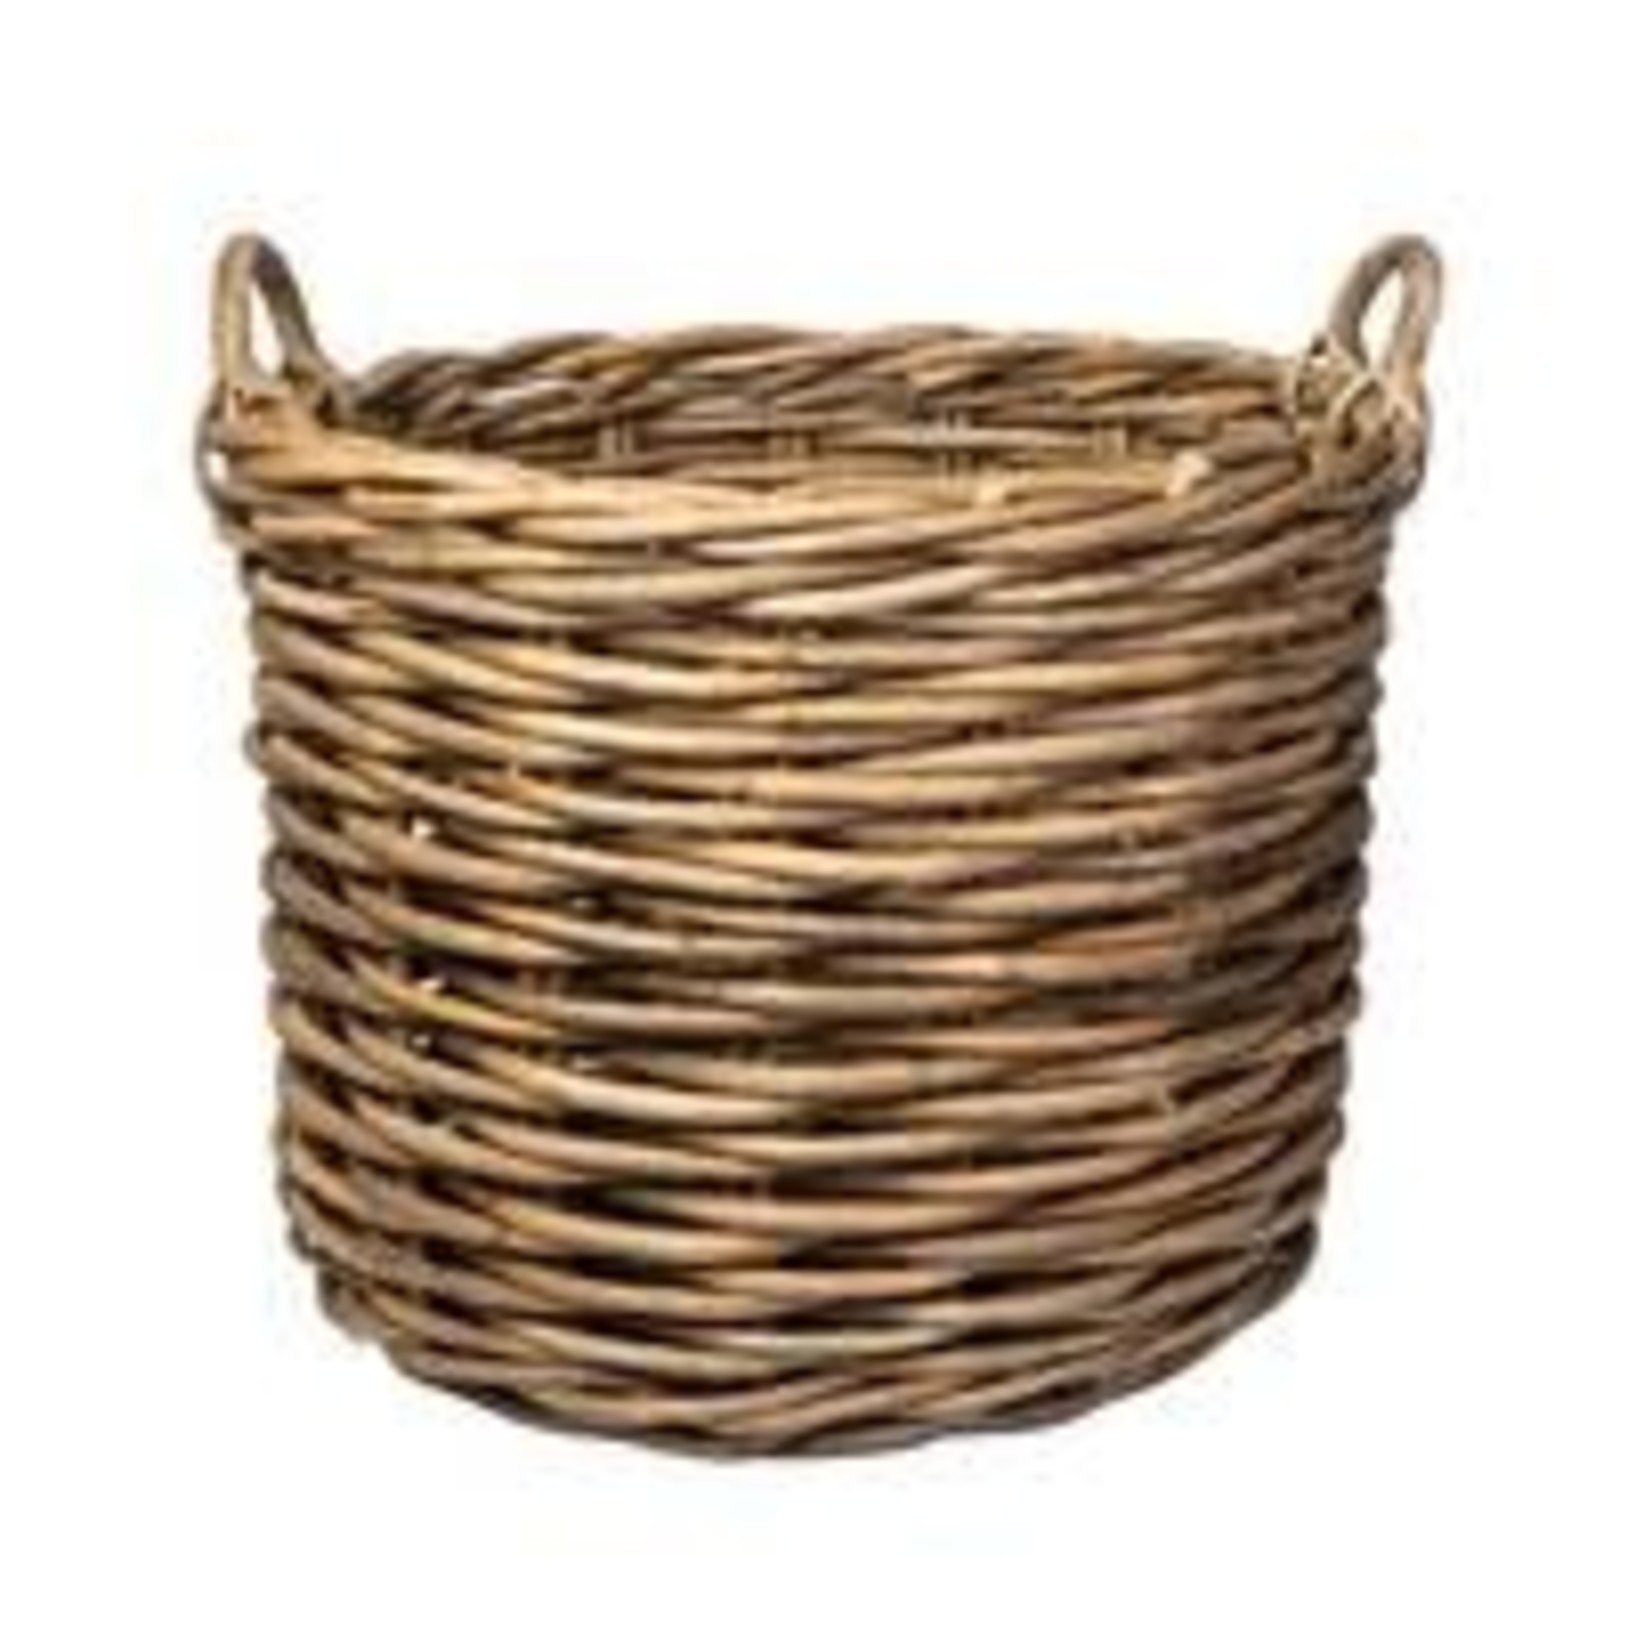 Bidk Home Large Rattan Round Basket with Handles